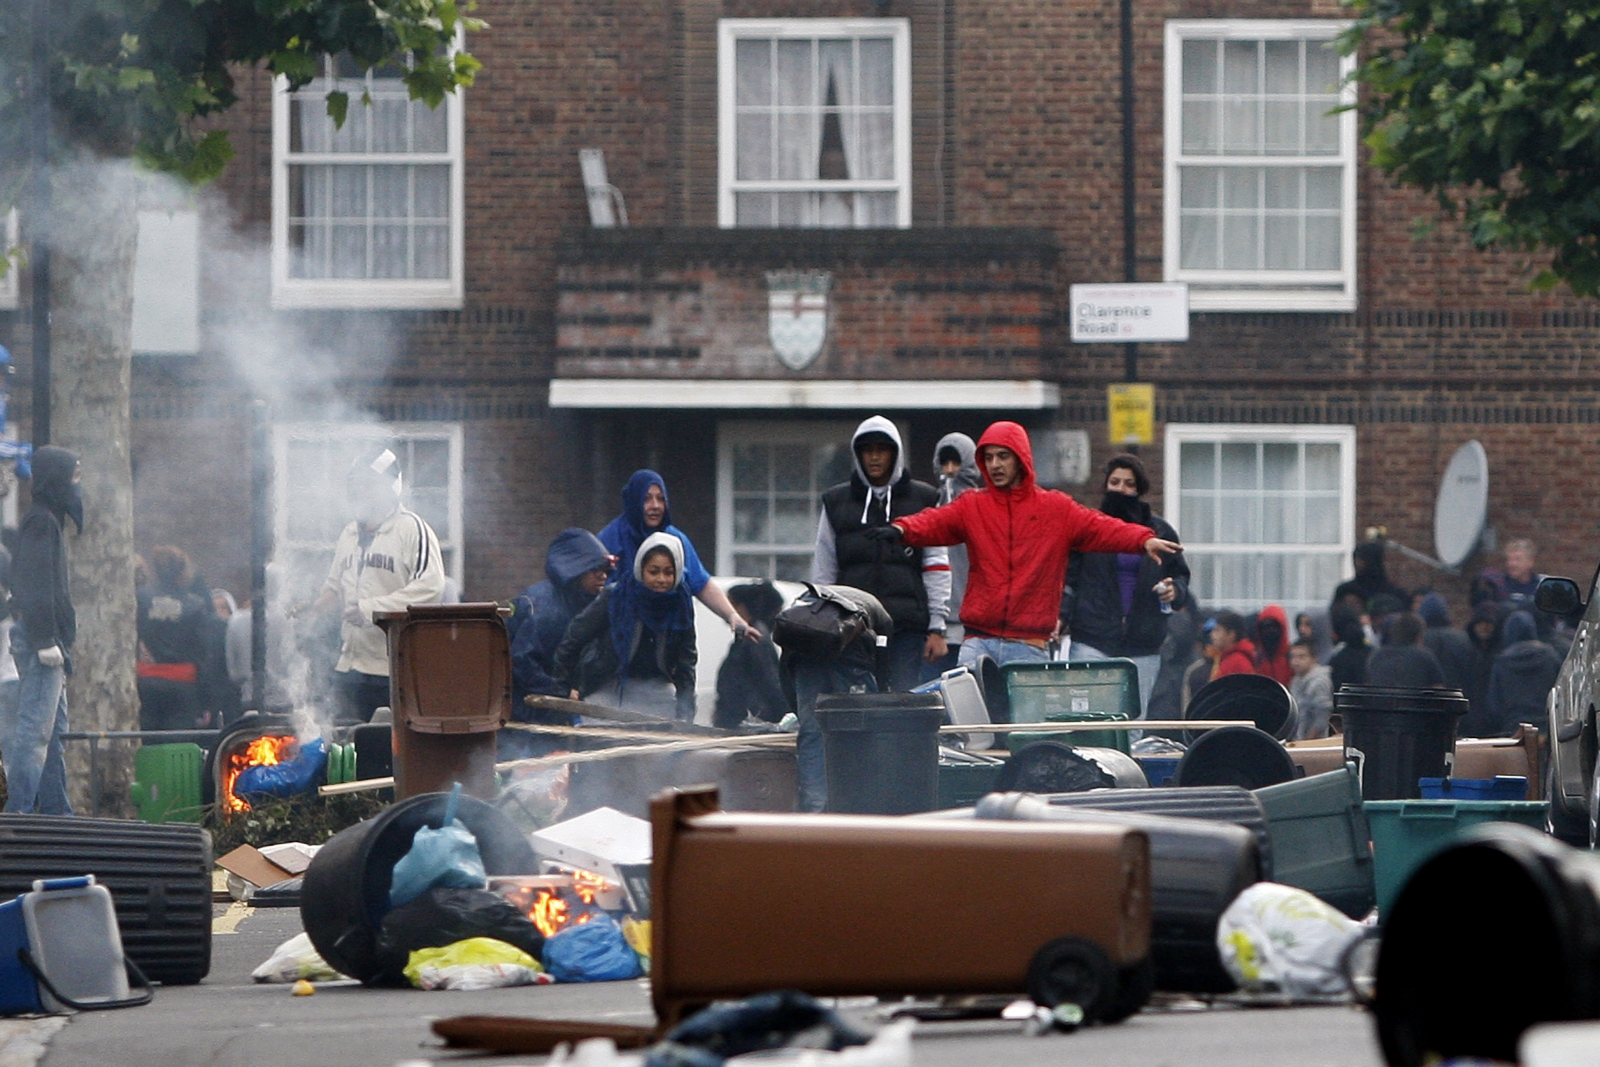 London riots 2011